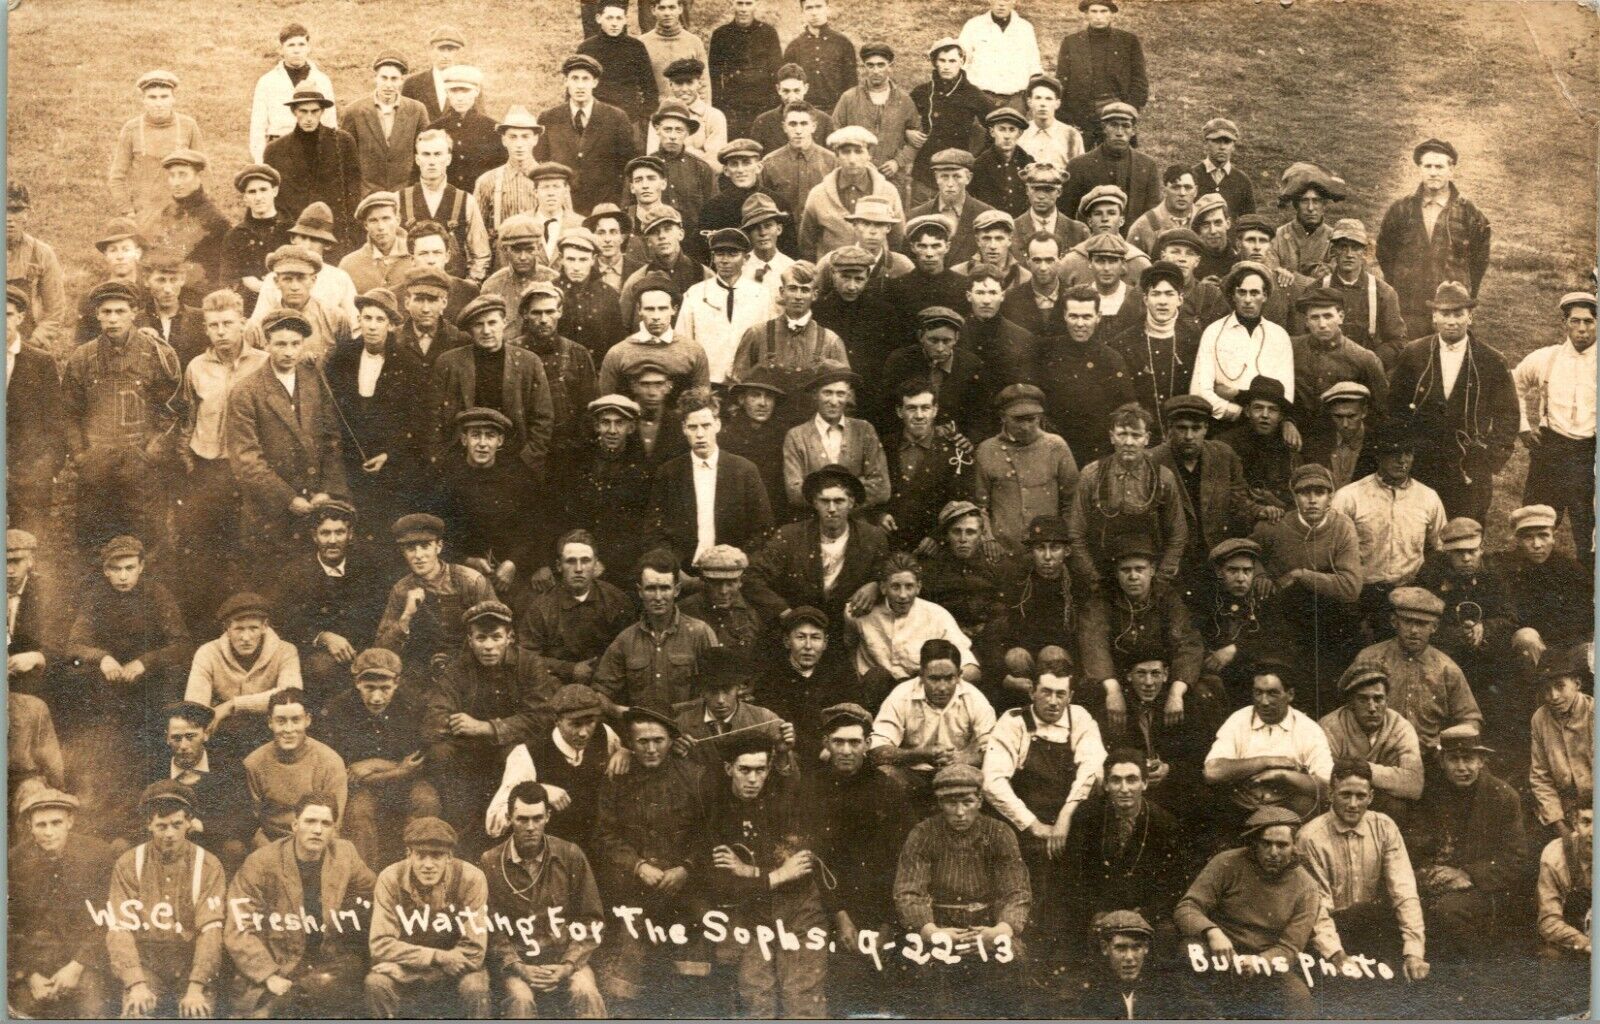 Vtg RPPC Sept 22, 1913 Washington State College WSU Freshmen Waiting for Sophs